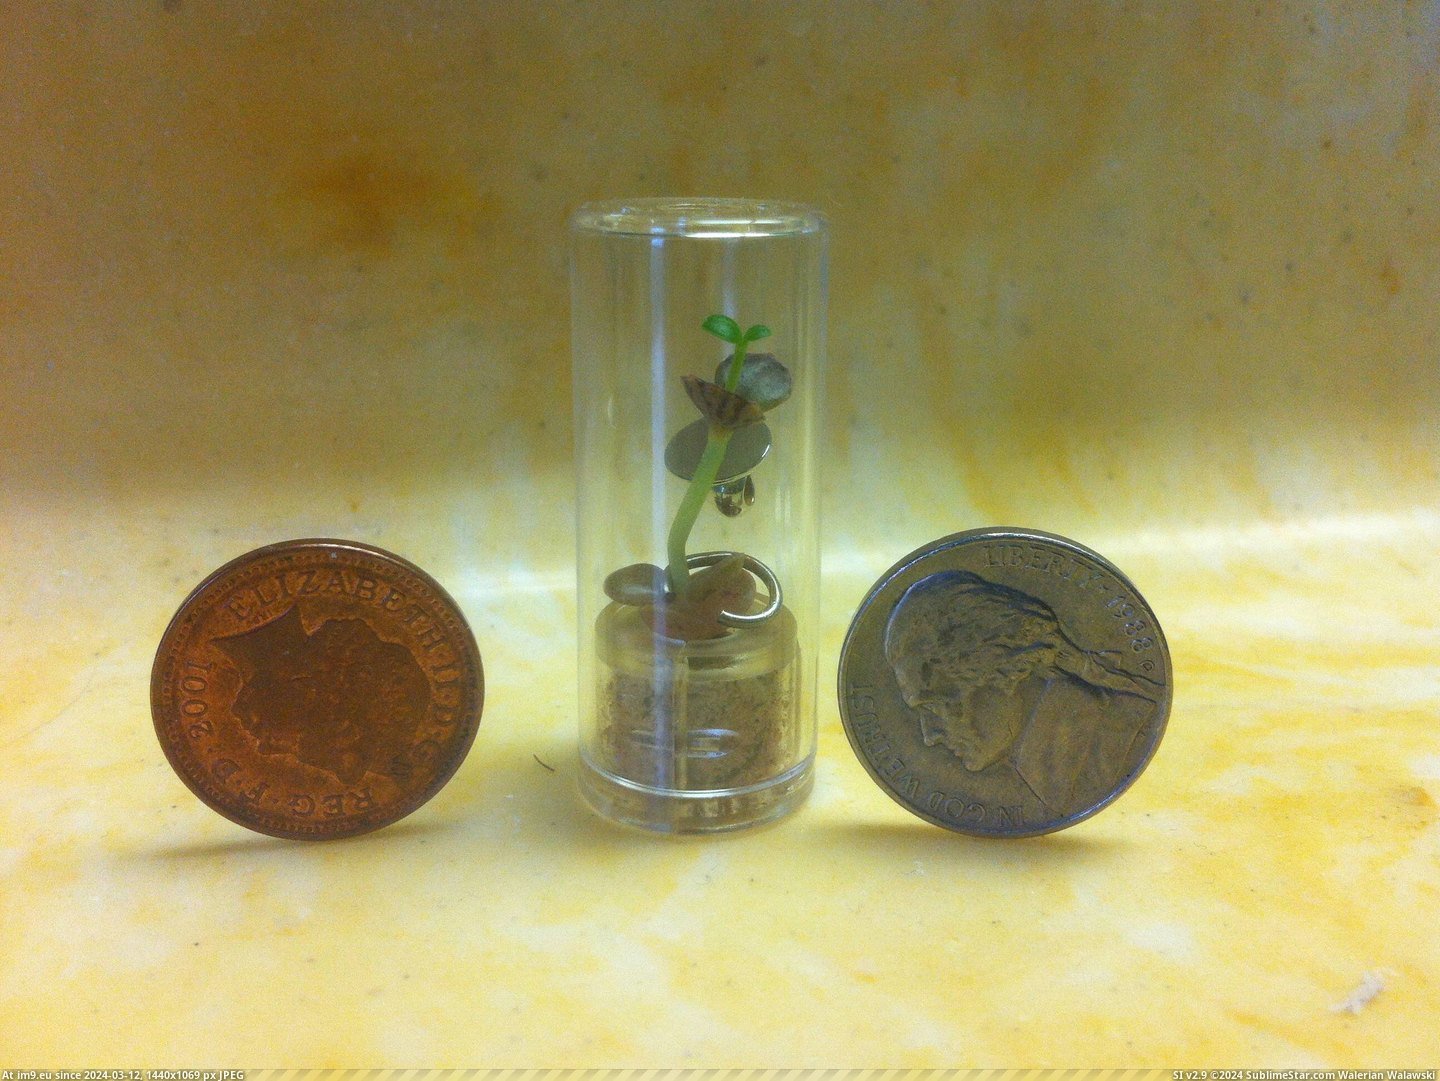 #Tiny #Mail #Tobacco #Company #Plant [Mildlyinteresting] A tobacco company sent me a tiny plant in the mail Pic. (Obraz z album My r/MILDLYINTERESTING favs))